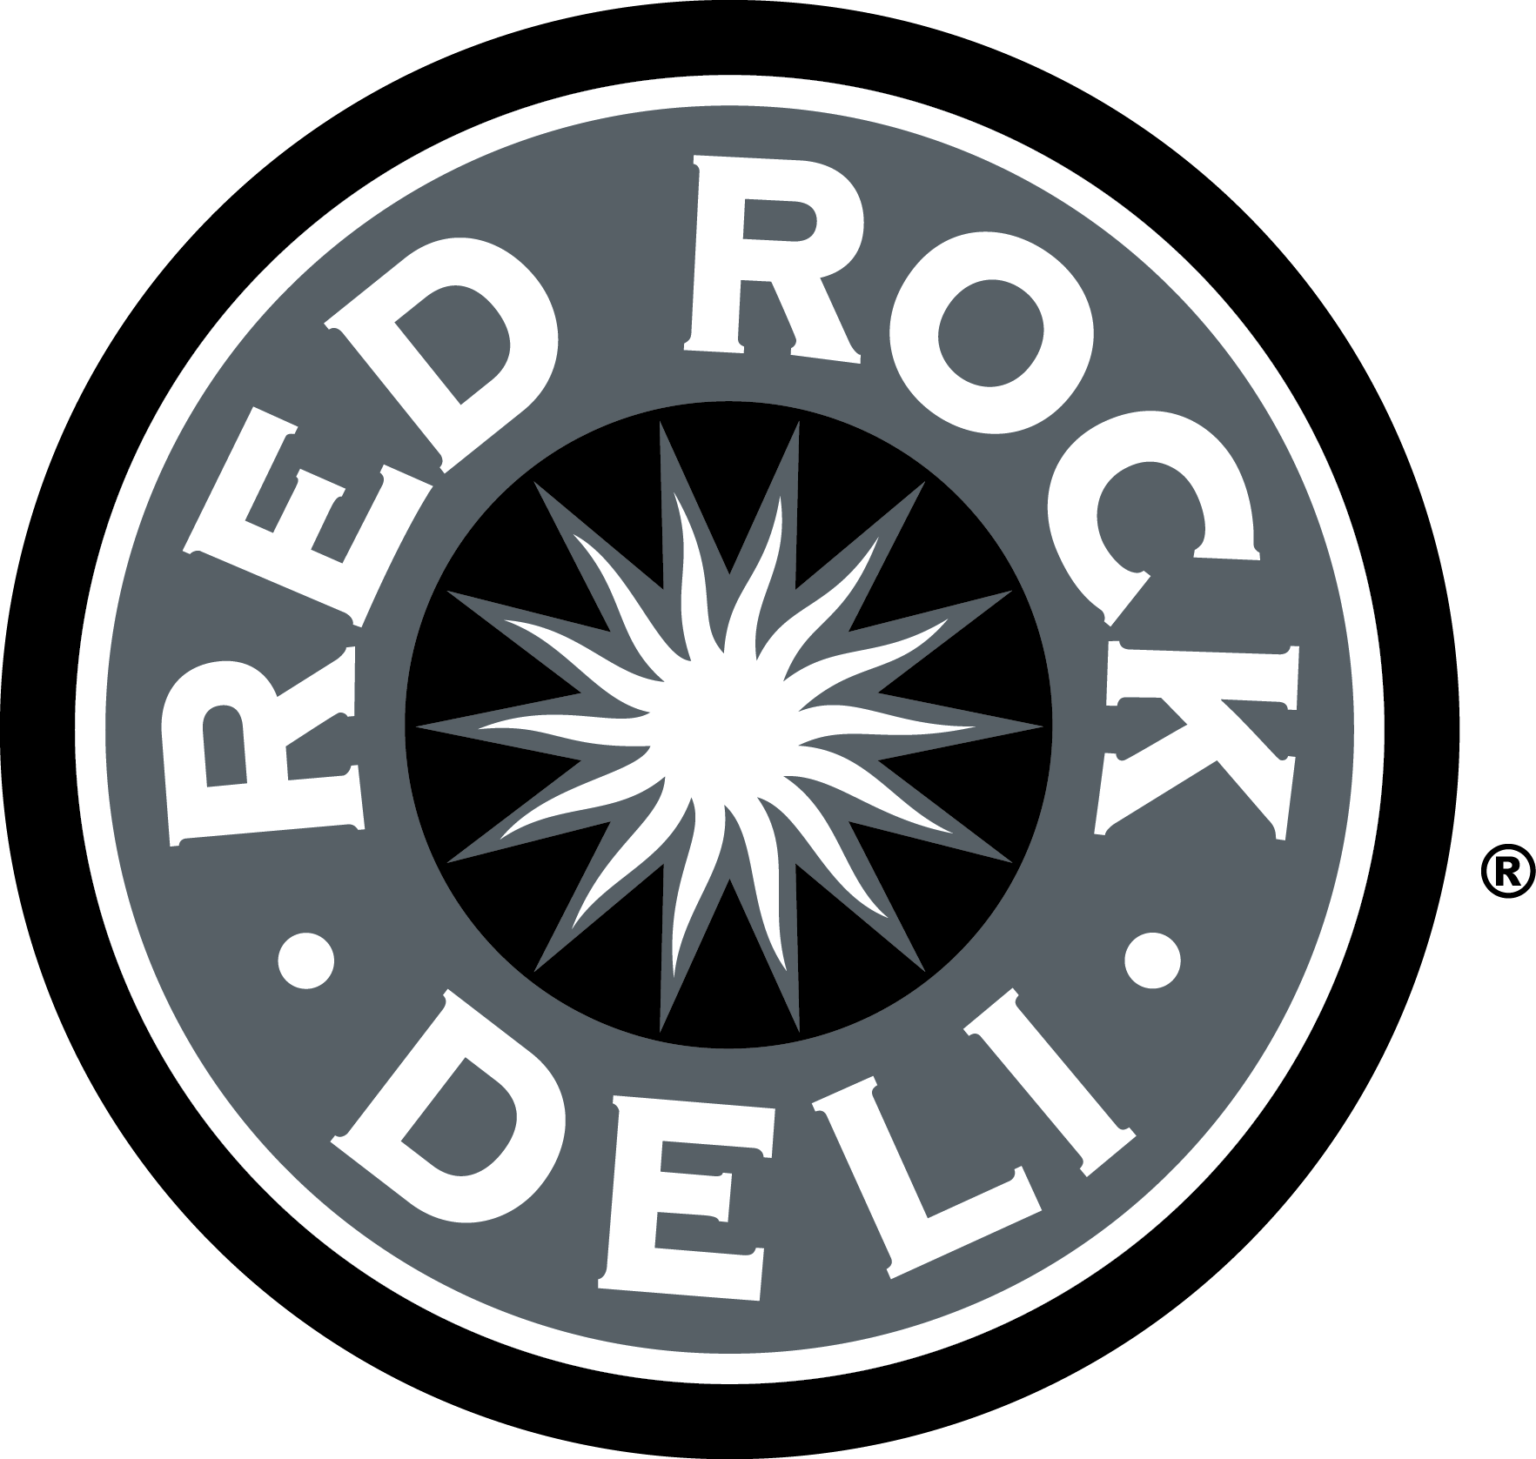 Edge mean. Red Rock biofuels logo. Deli logo. Deli logo PNG.